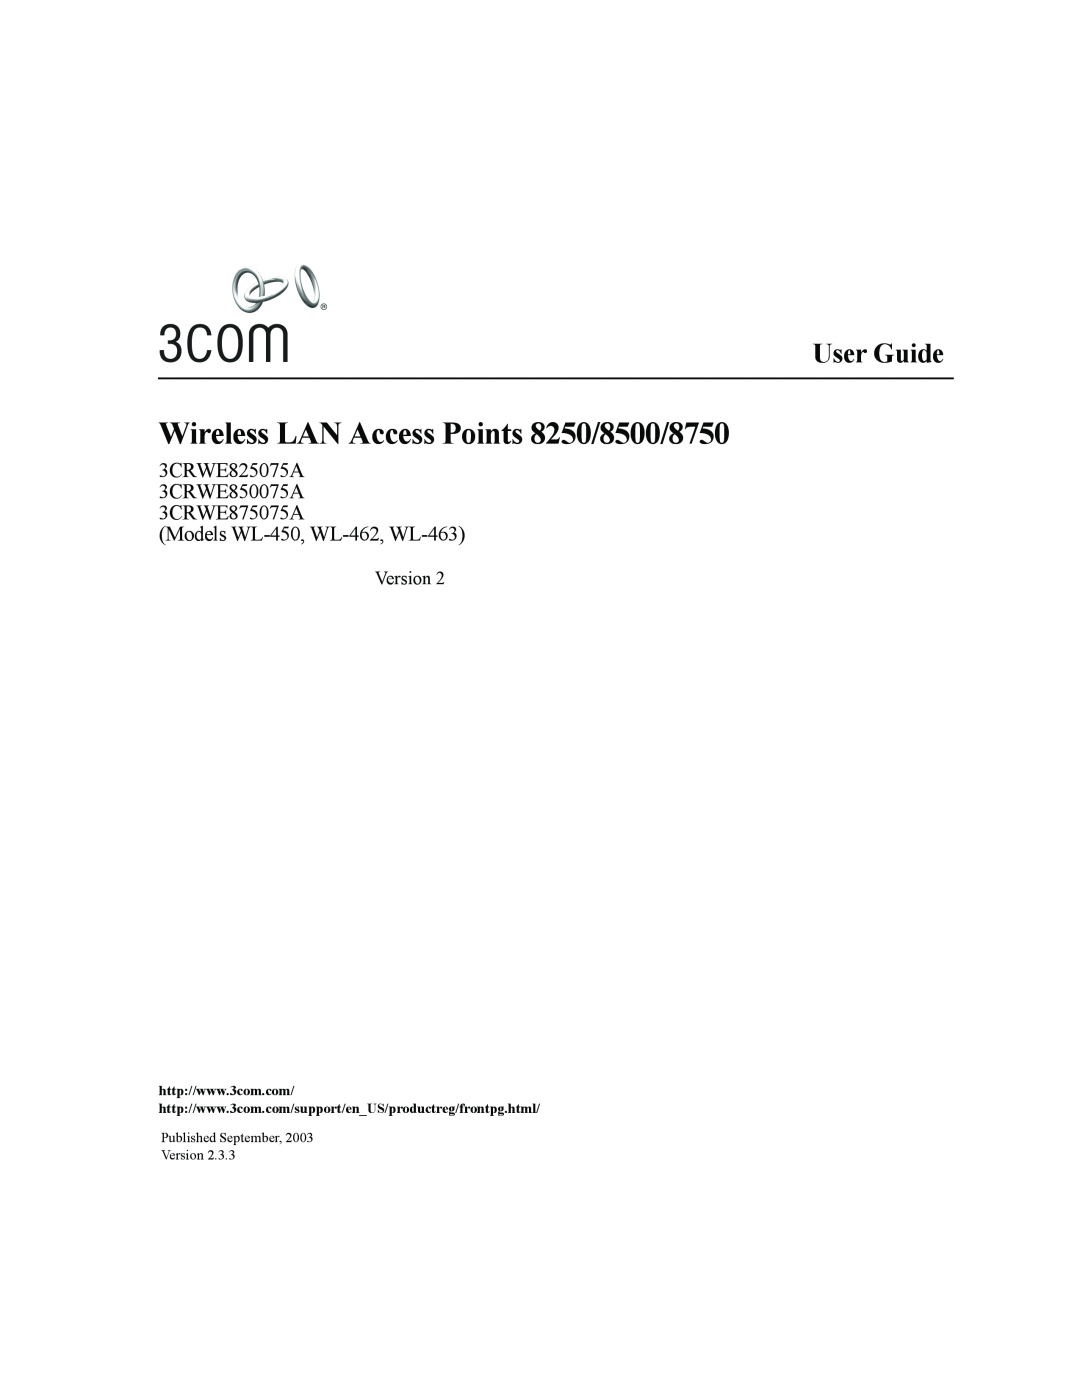 3Com 3CRWE825075A, 3CRWE850075A, 3CRWE875075A manual Wireless LAN Access Points 8250/8500/8750, User Guide 